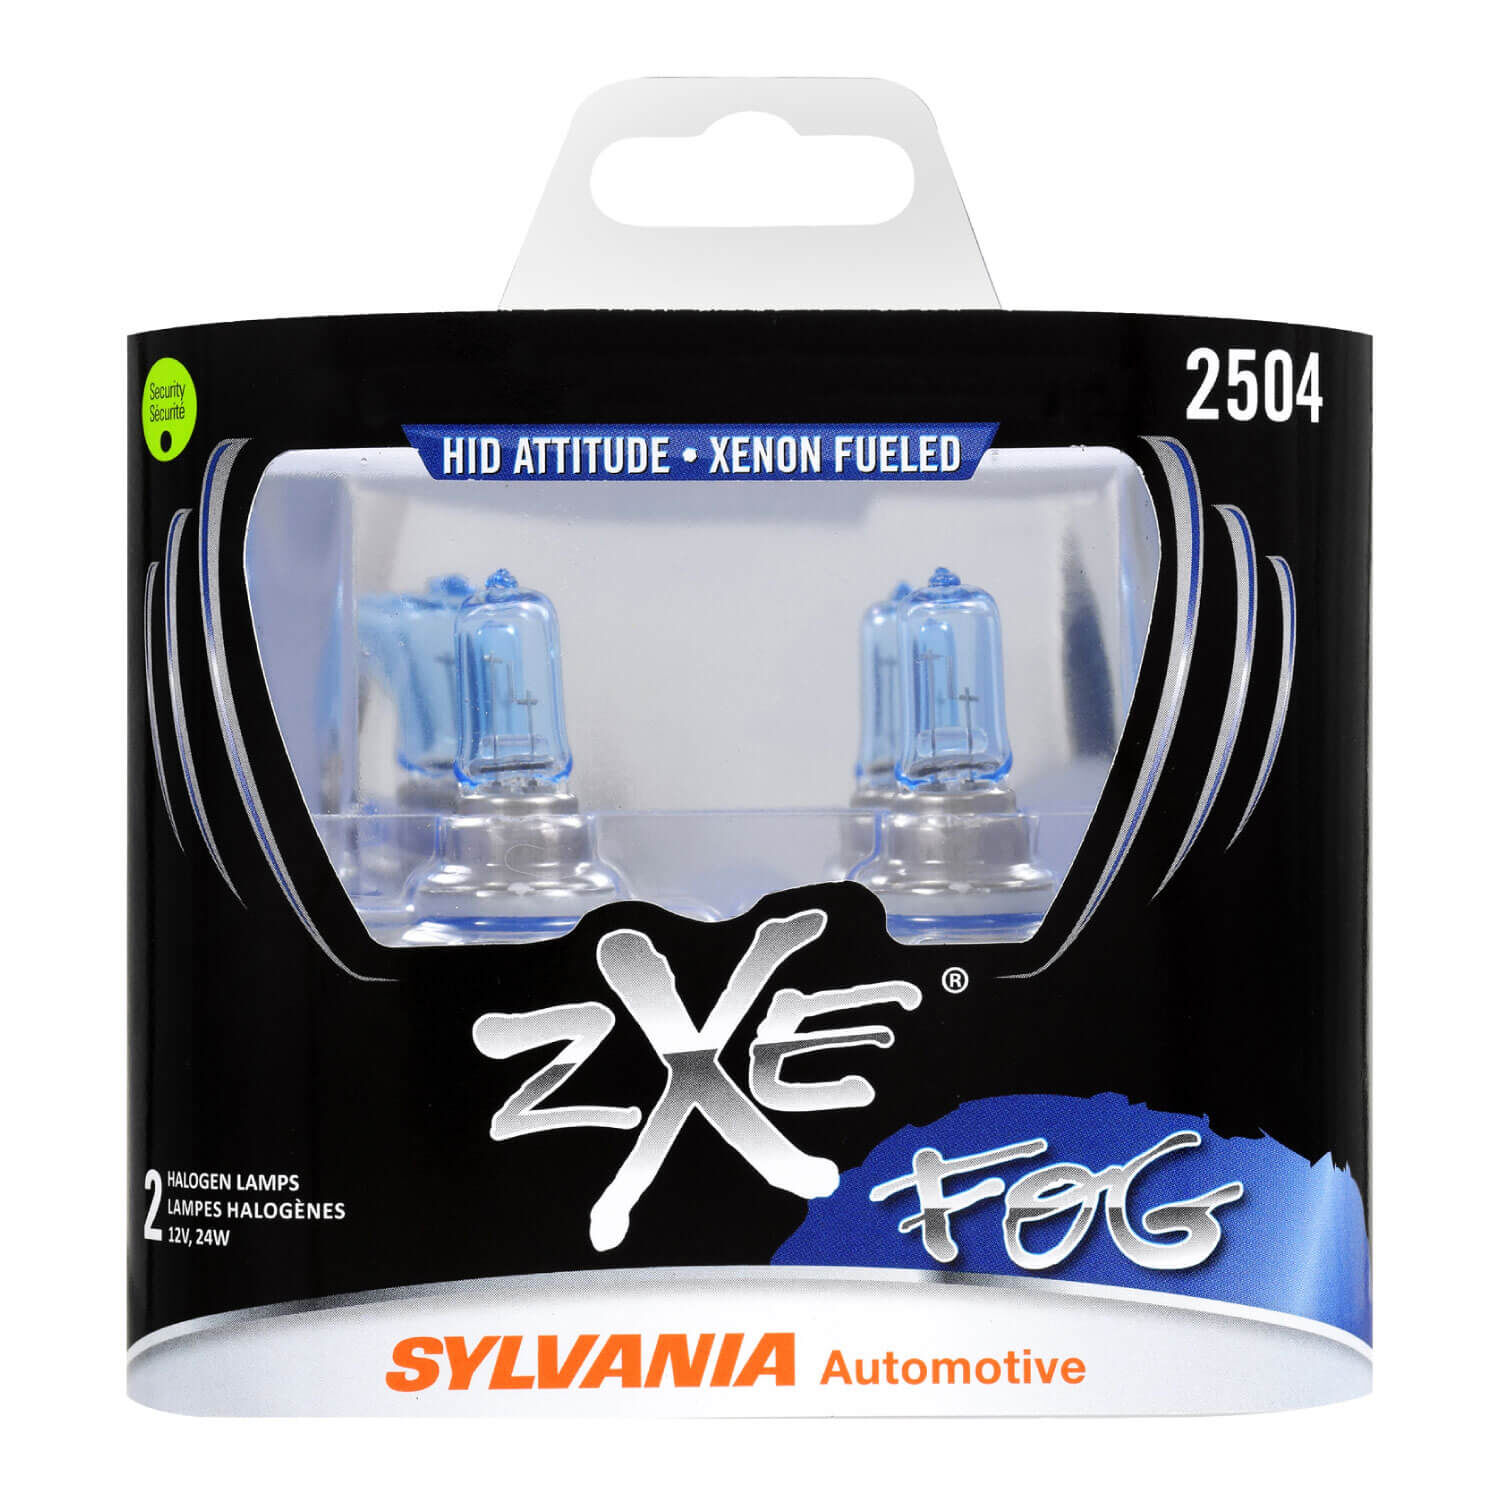 SYLVANIA 2504 SilverStar zXe Halogen Fog Bulb, 2 Pack